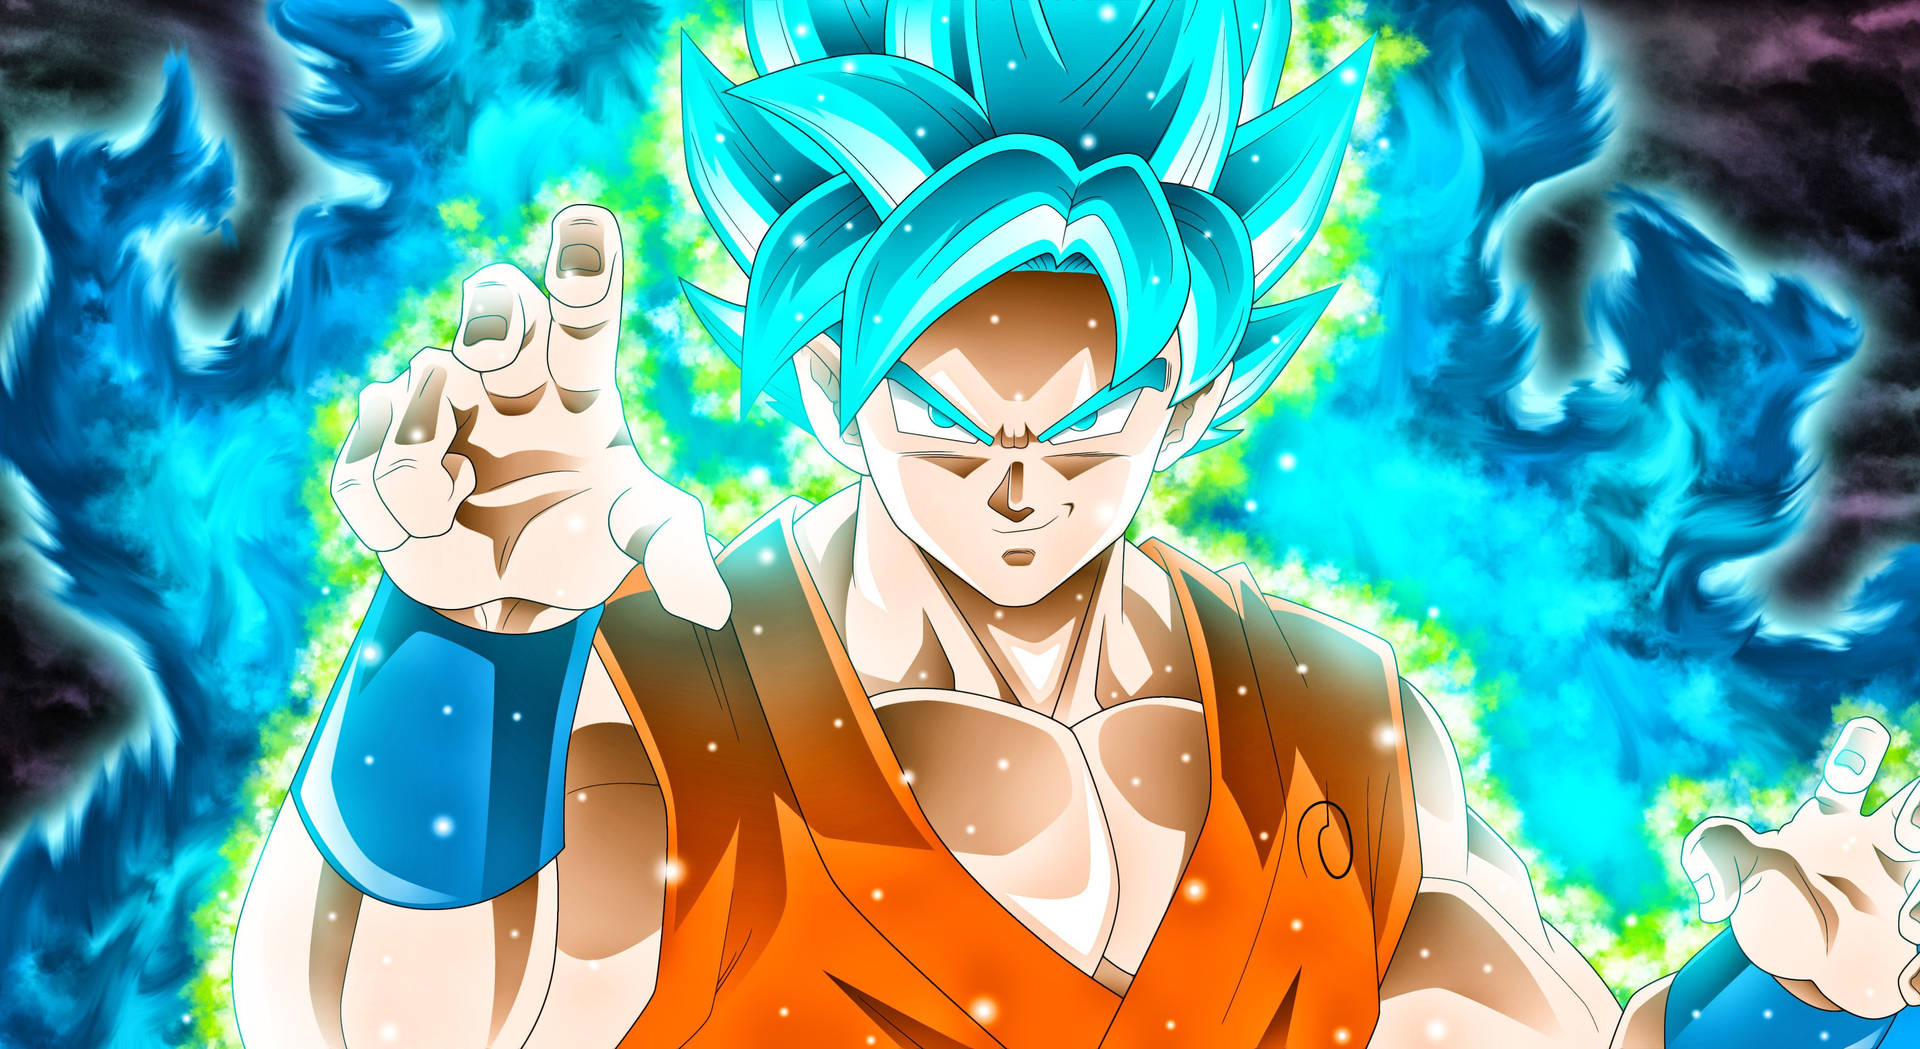 Free Goku Dragon Ball Super Wallpaper Downloads, [100+] Goku Dragon Ball  Super Wallpapers for FREE 